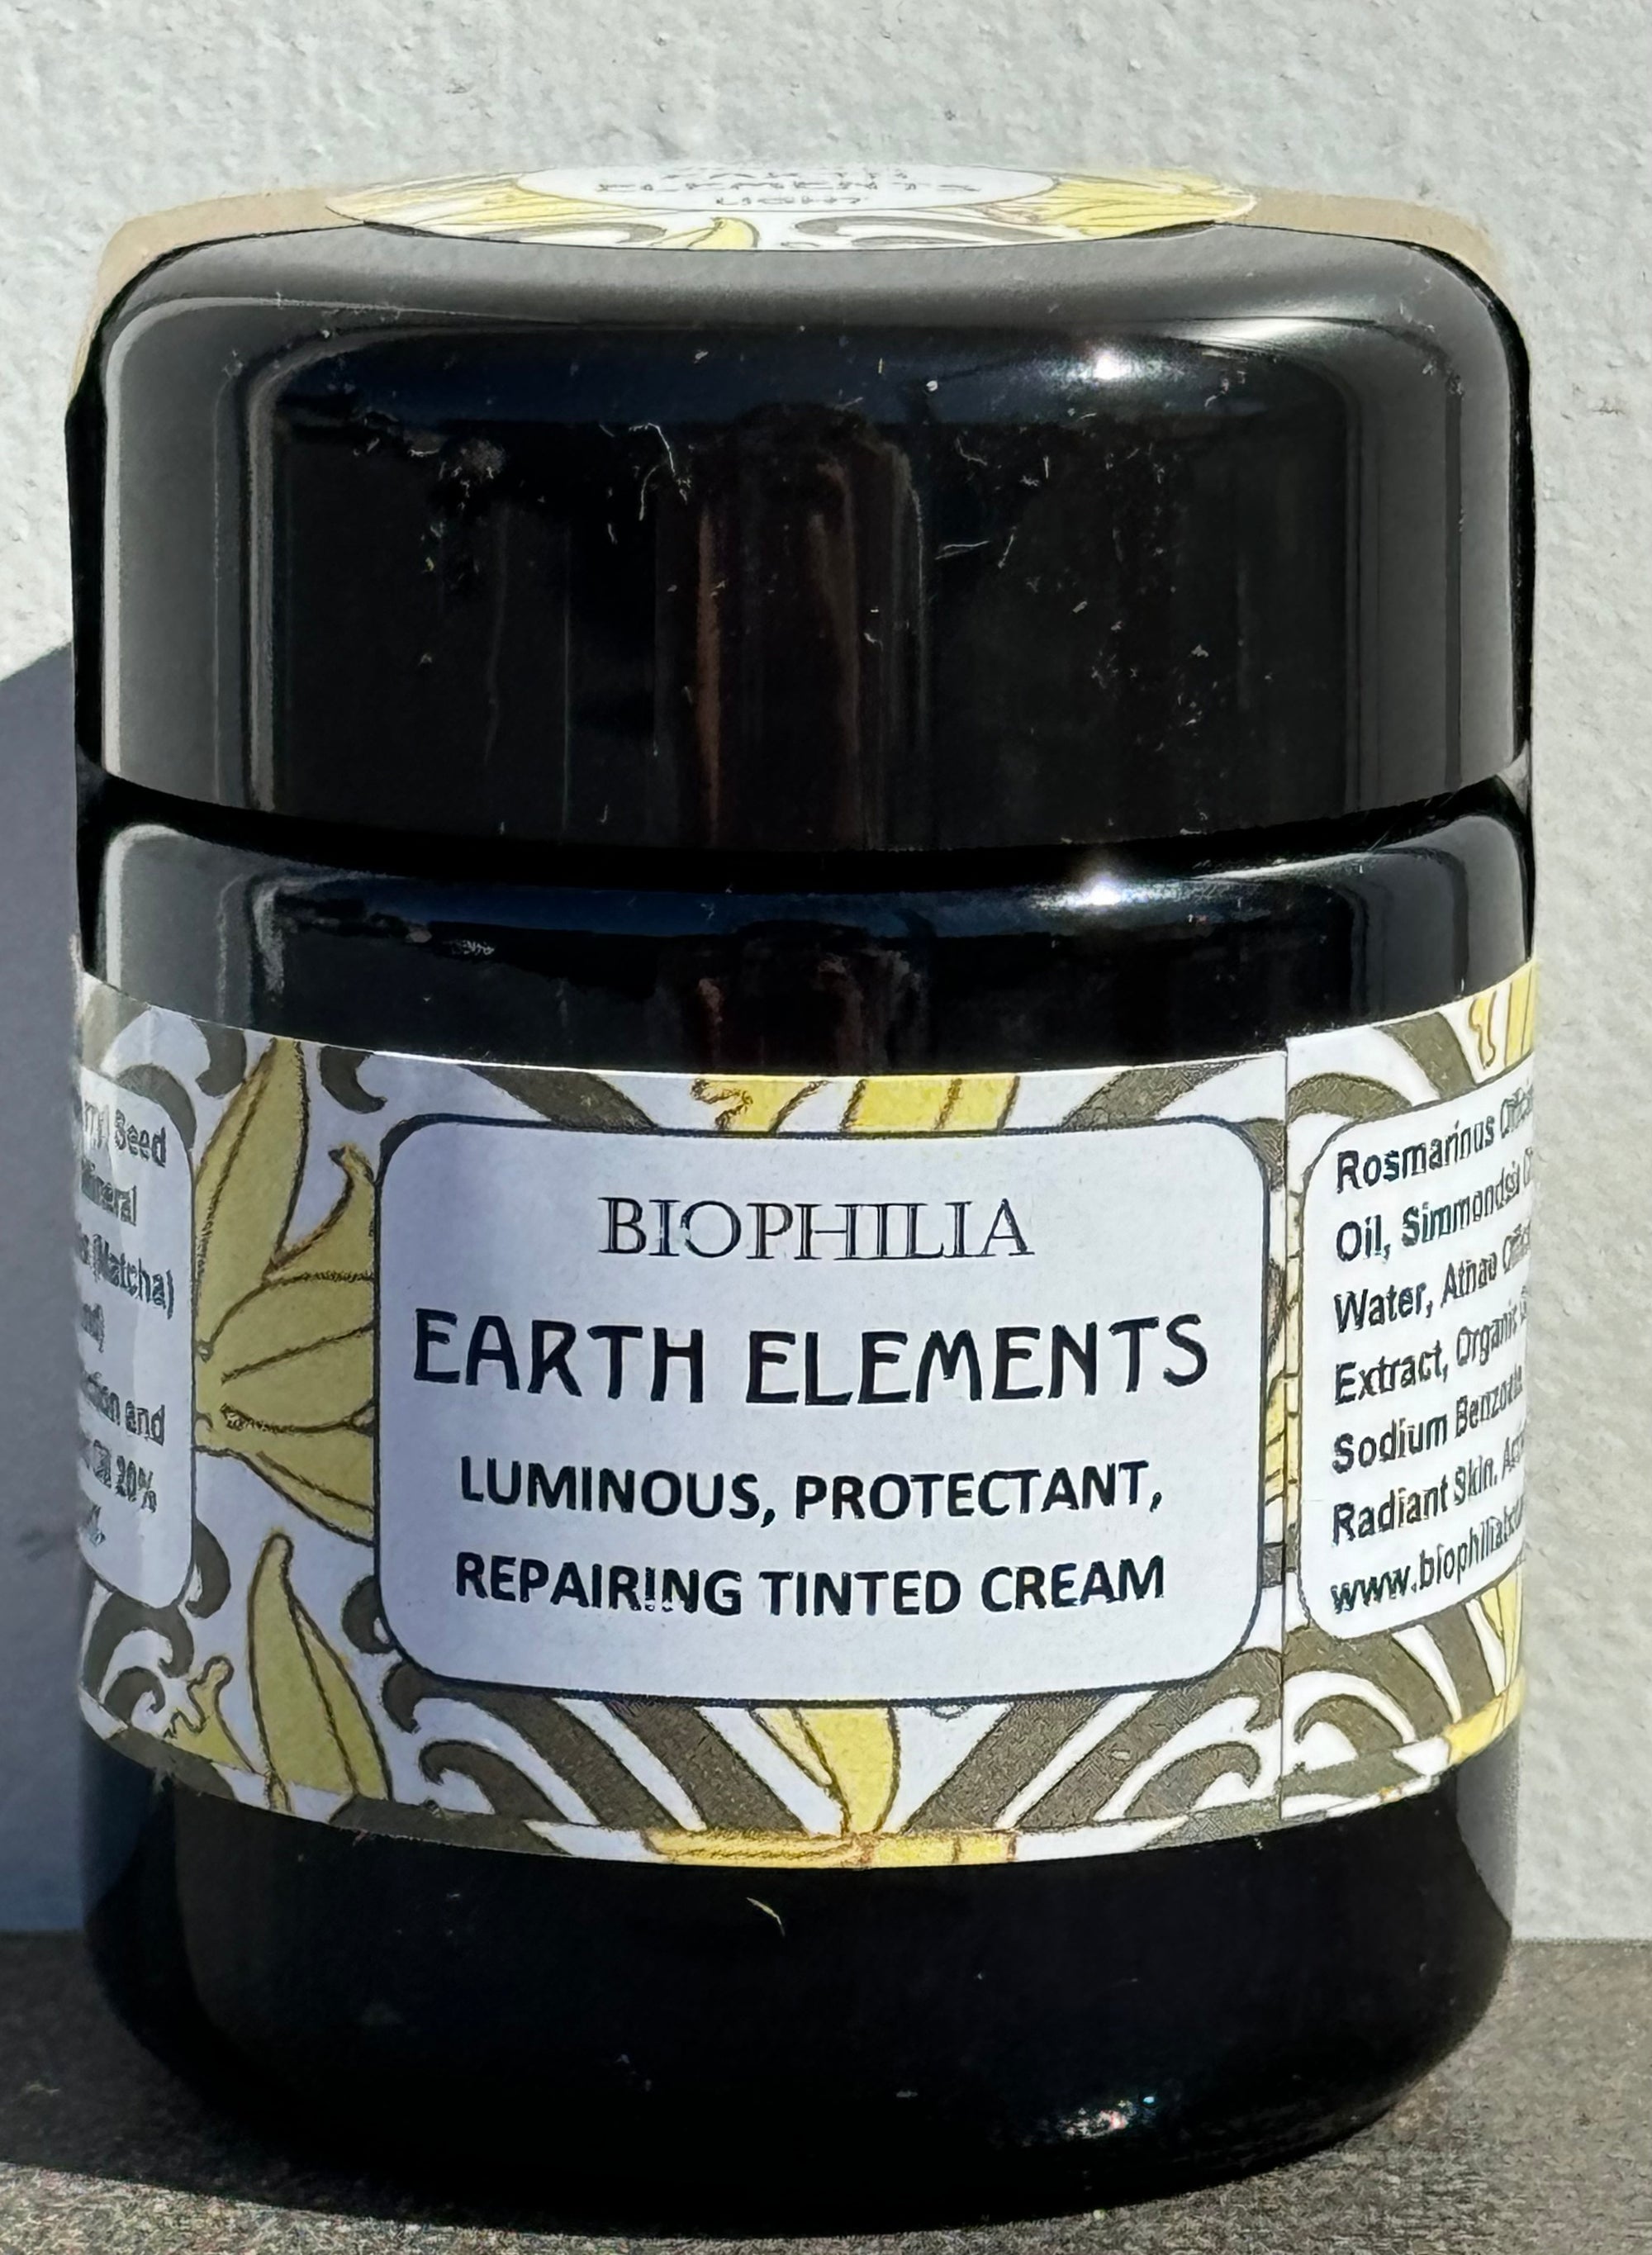 Biophilia Botanicals Earth Elements Luminous Protecting Tinted Cream